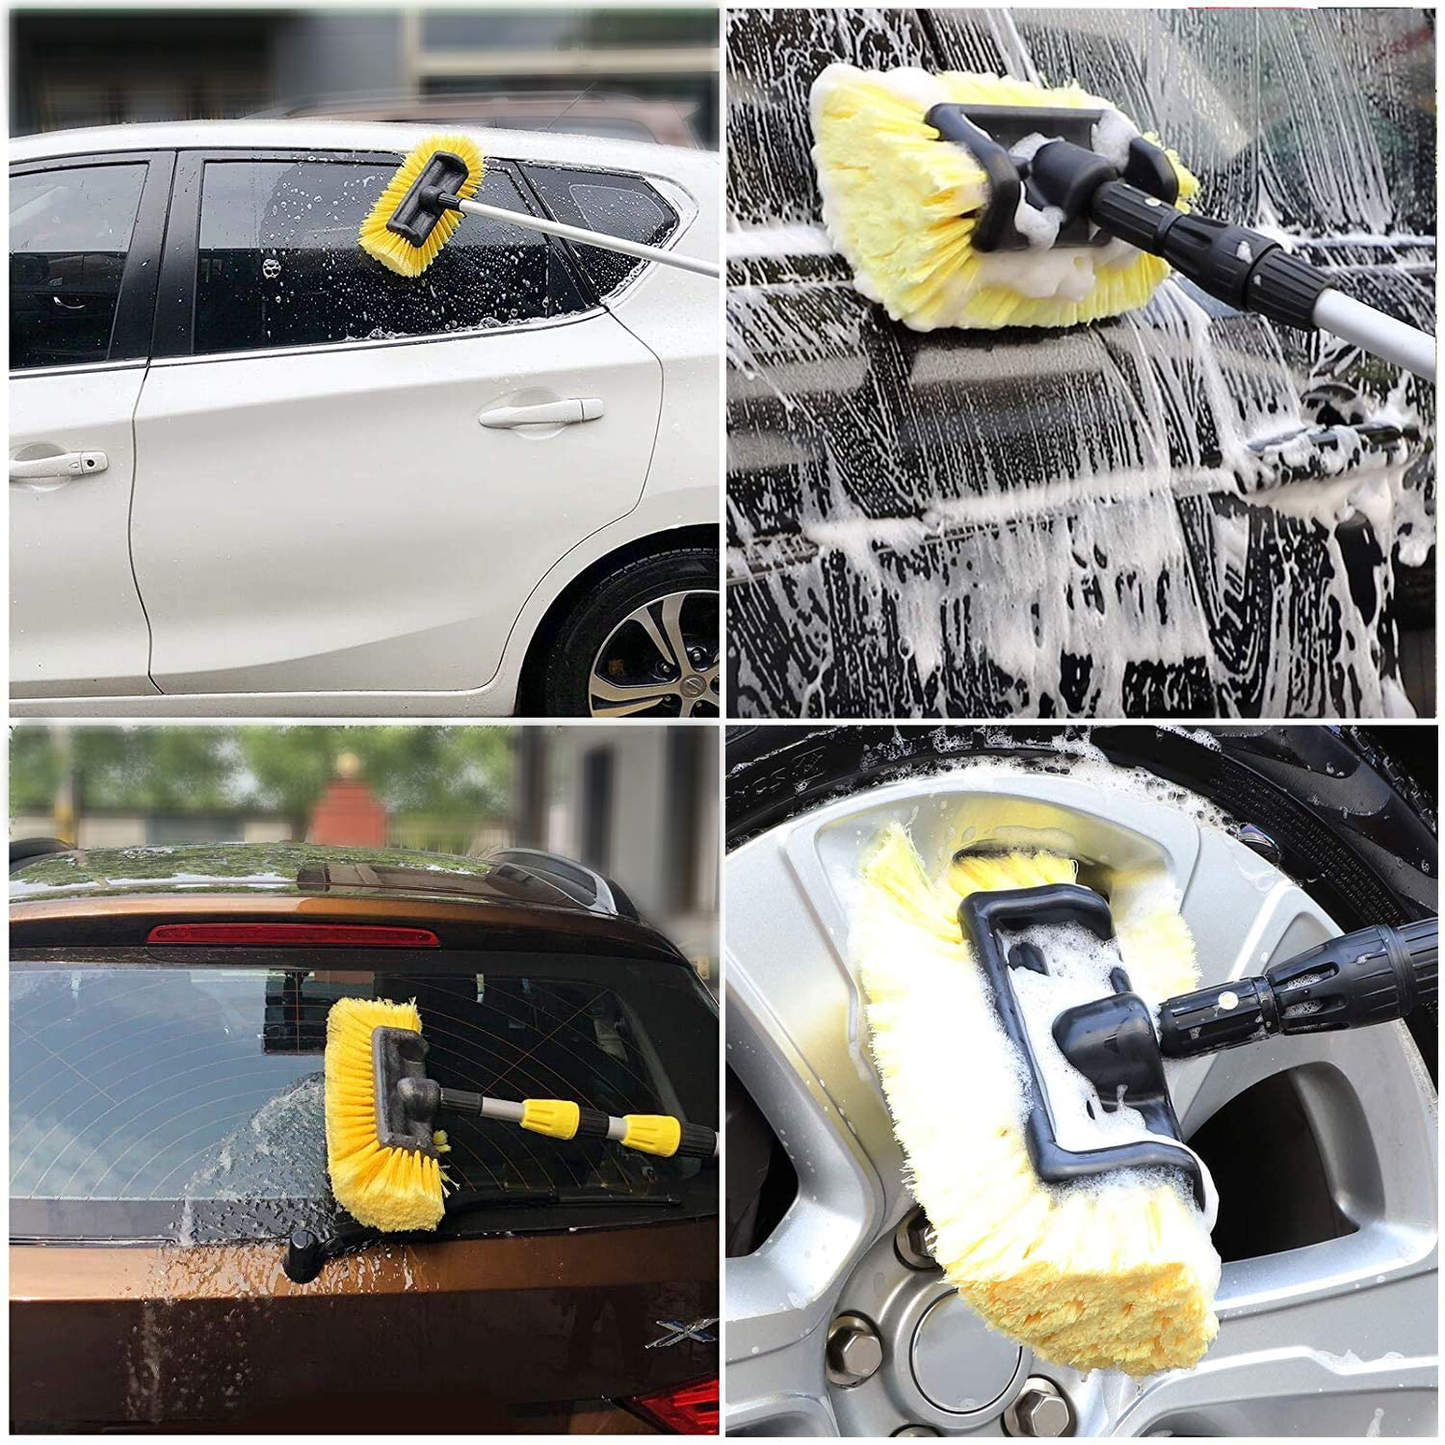 Anyyion 12 Foot Car Wash Brush, 5-12 Foot Telescopic Flow Through Car Washing Brush Soft Bristles wash Car, RV, Boat, Solar Panel, Deck, Floor | Bumper Prevents Scratch (12 Foot)